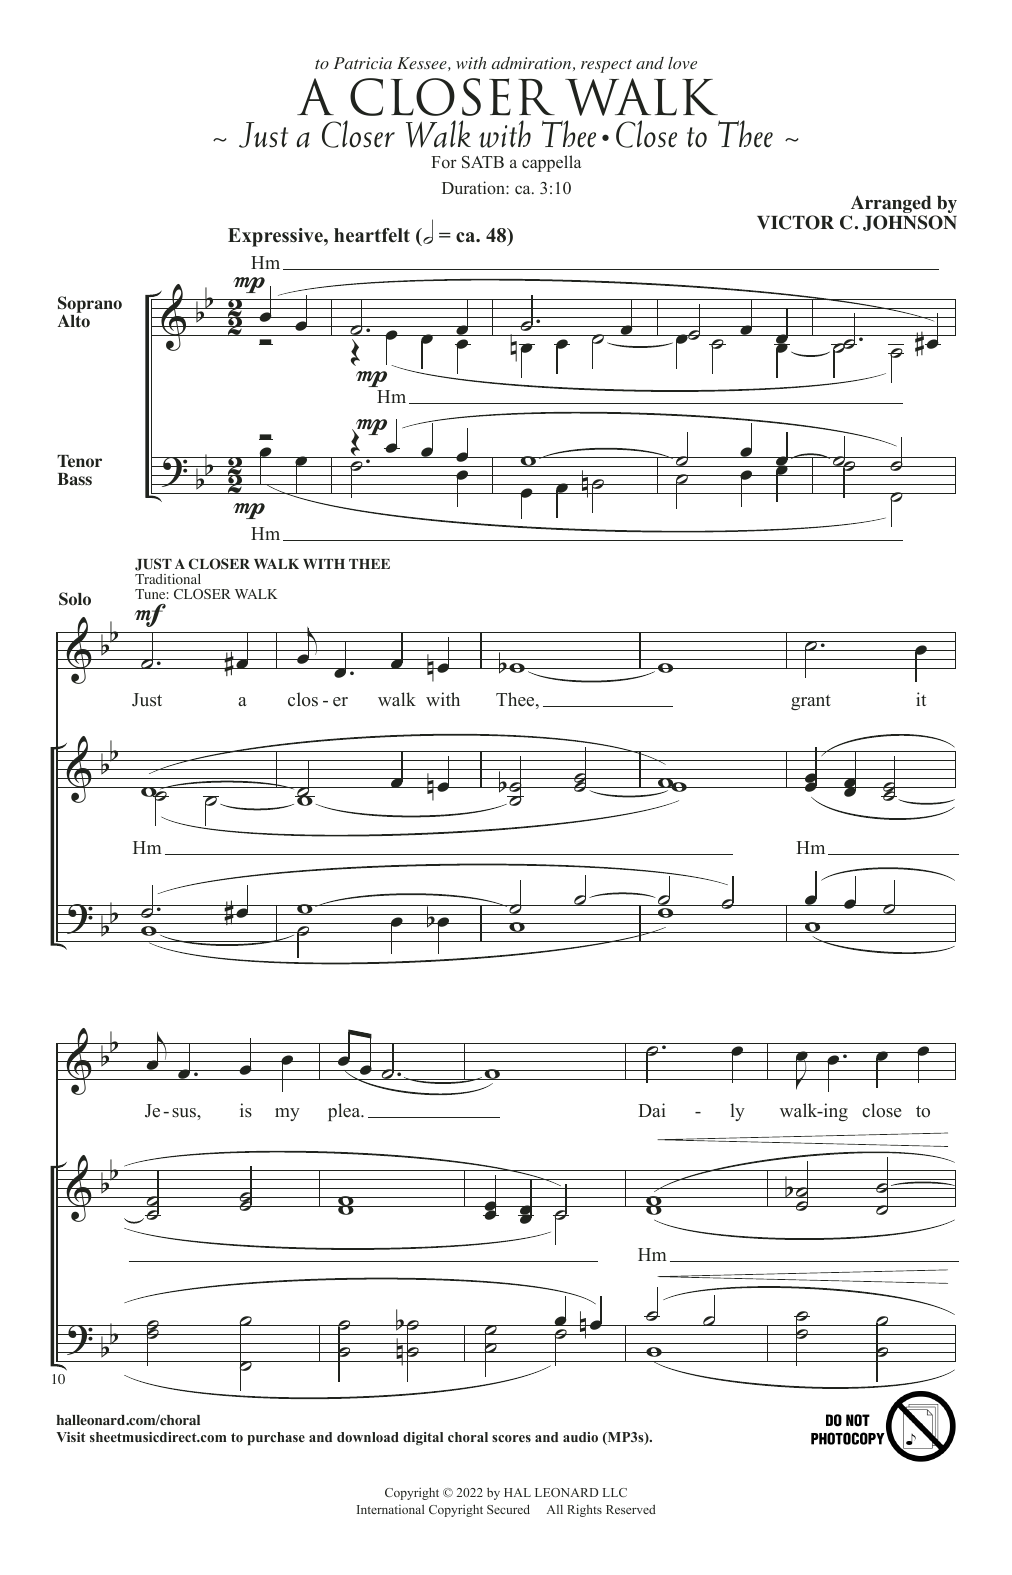 Victor C. Johnson A Closer Walk sheet music notes and chords arranged for SATB Choir